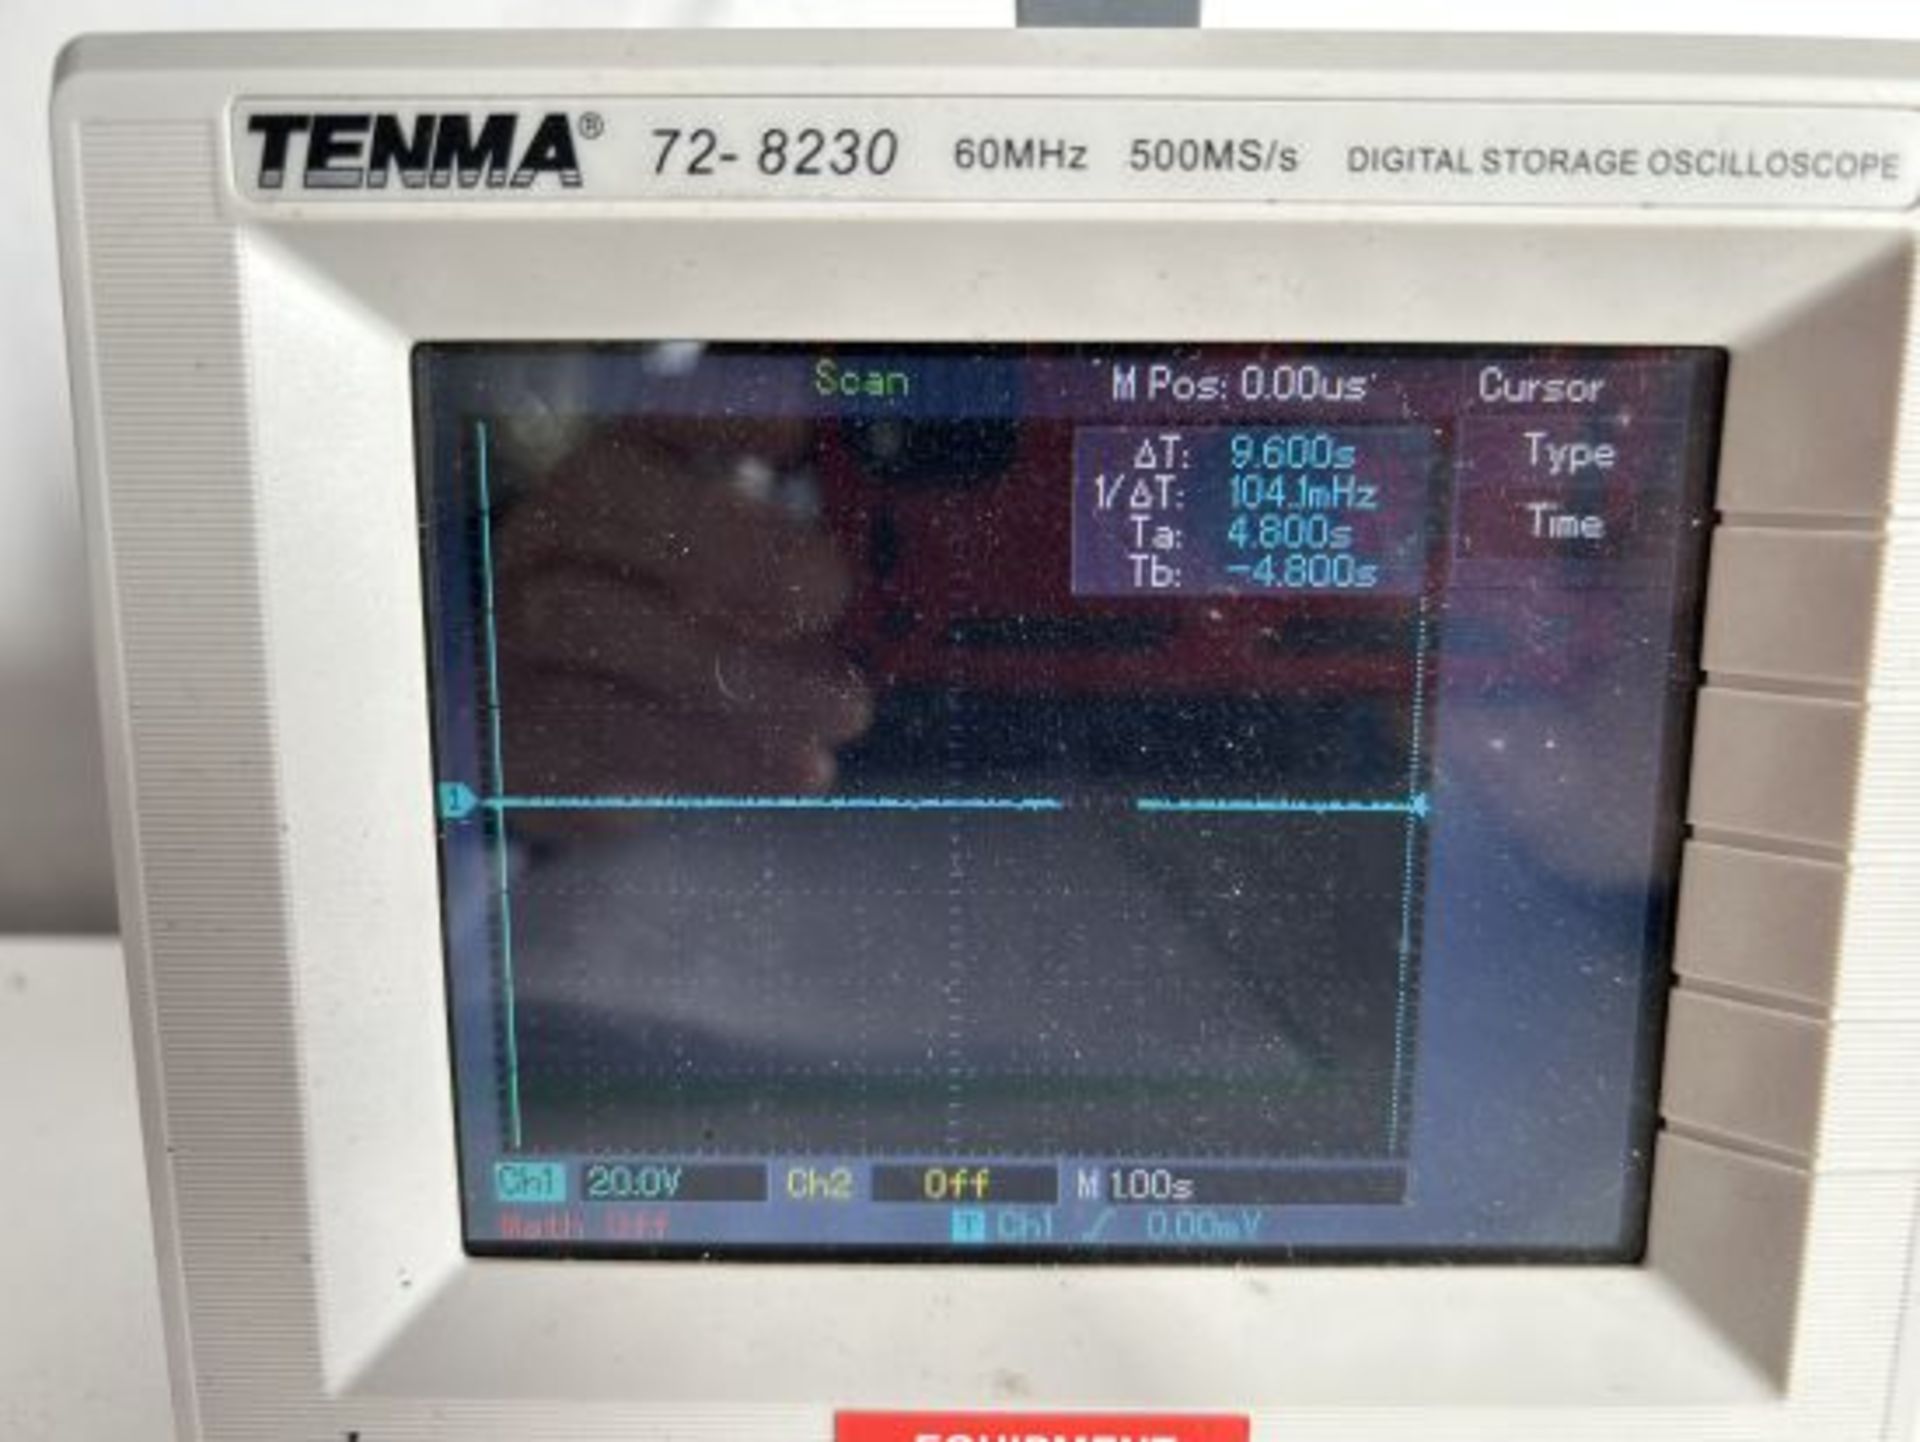 Tenma 72-8230 Digital Storage Oscilloscope, 60MHZ, 500MS/s. - Image 2 of 3